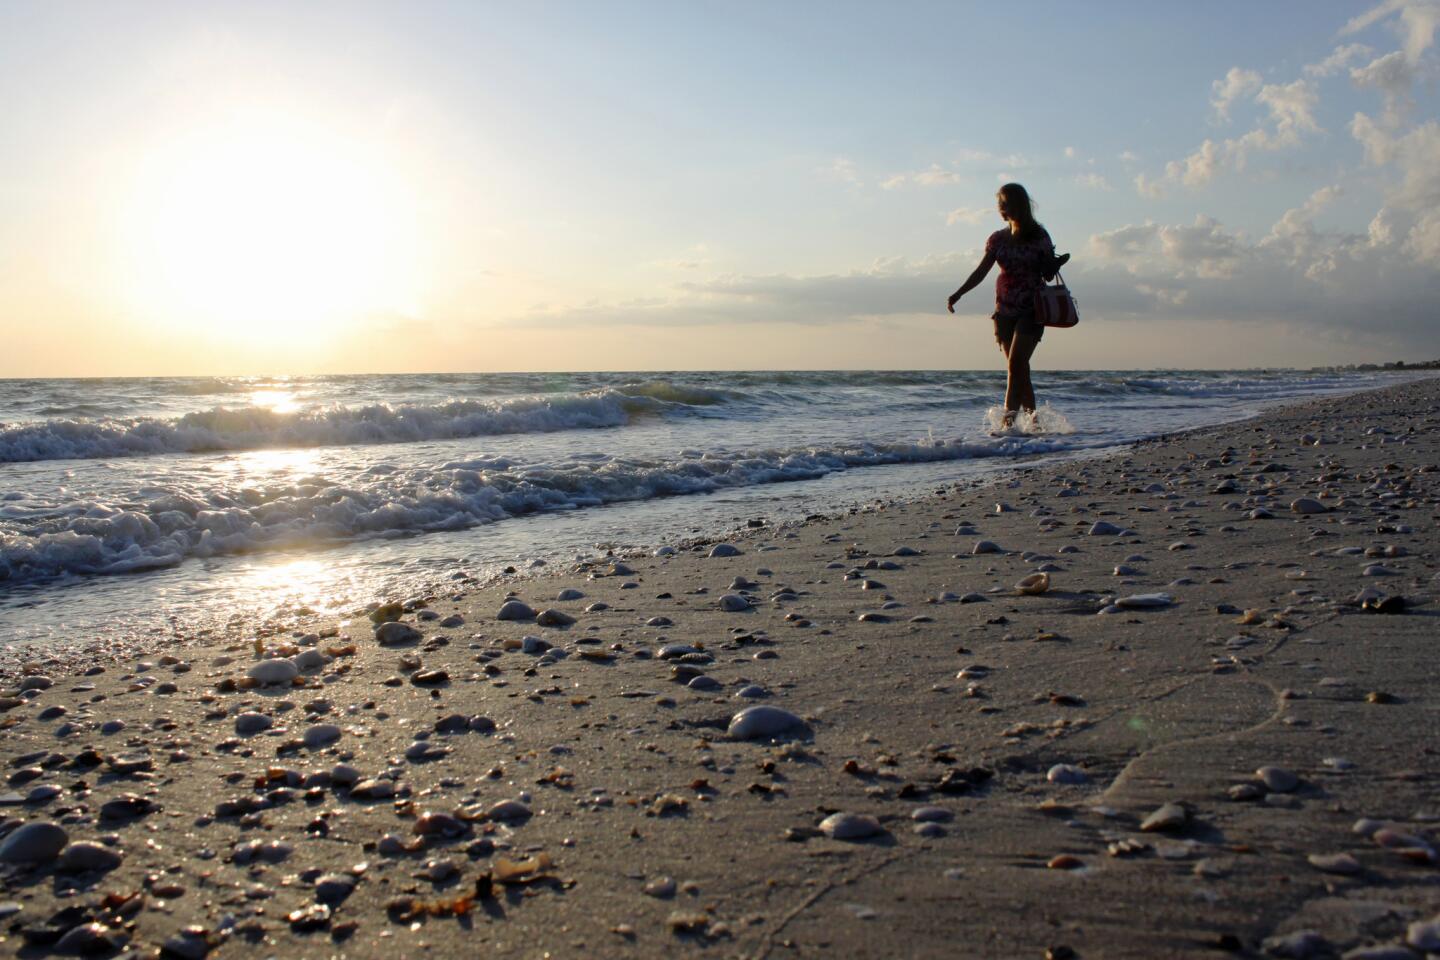 No. 2: Barefoot Beach, Florida